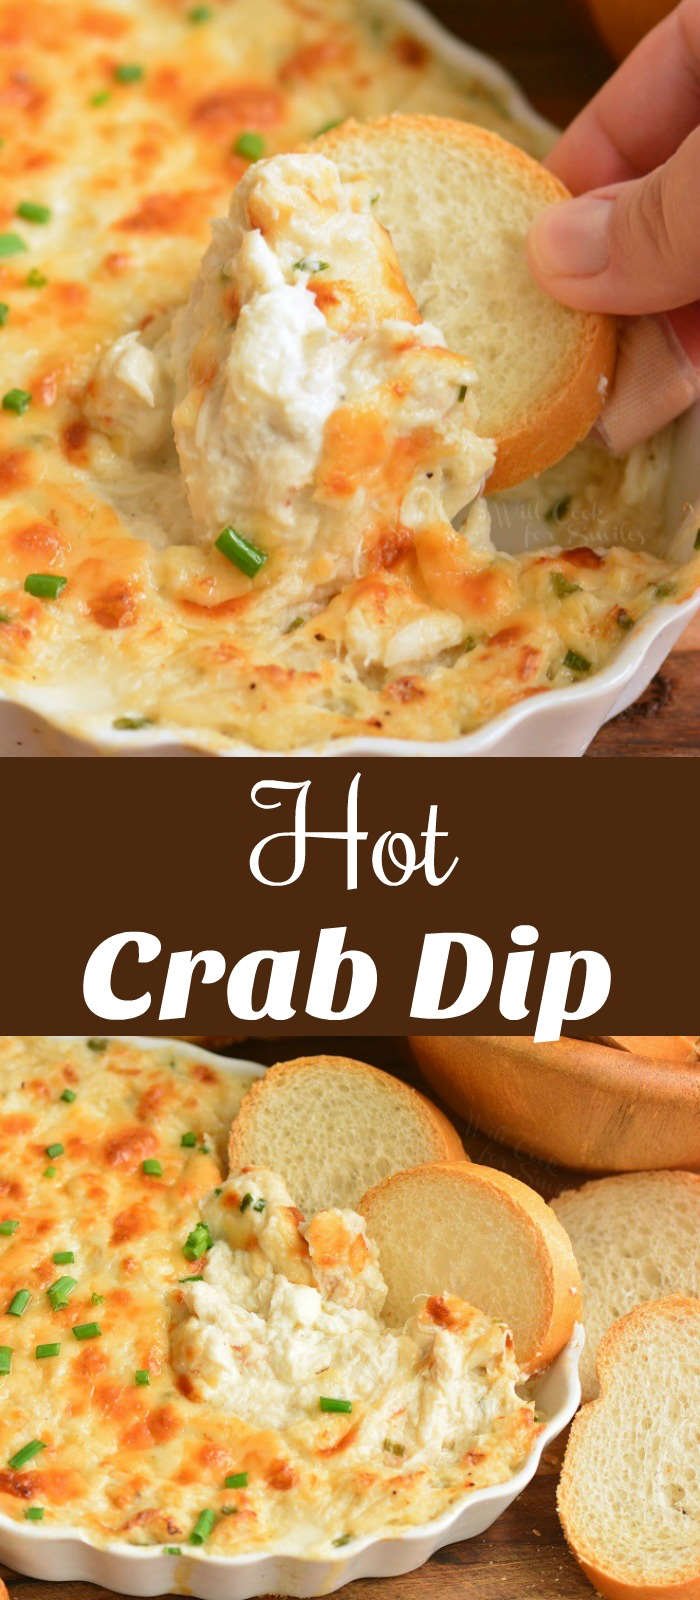 hot crab dip collage 